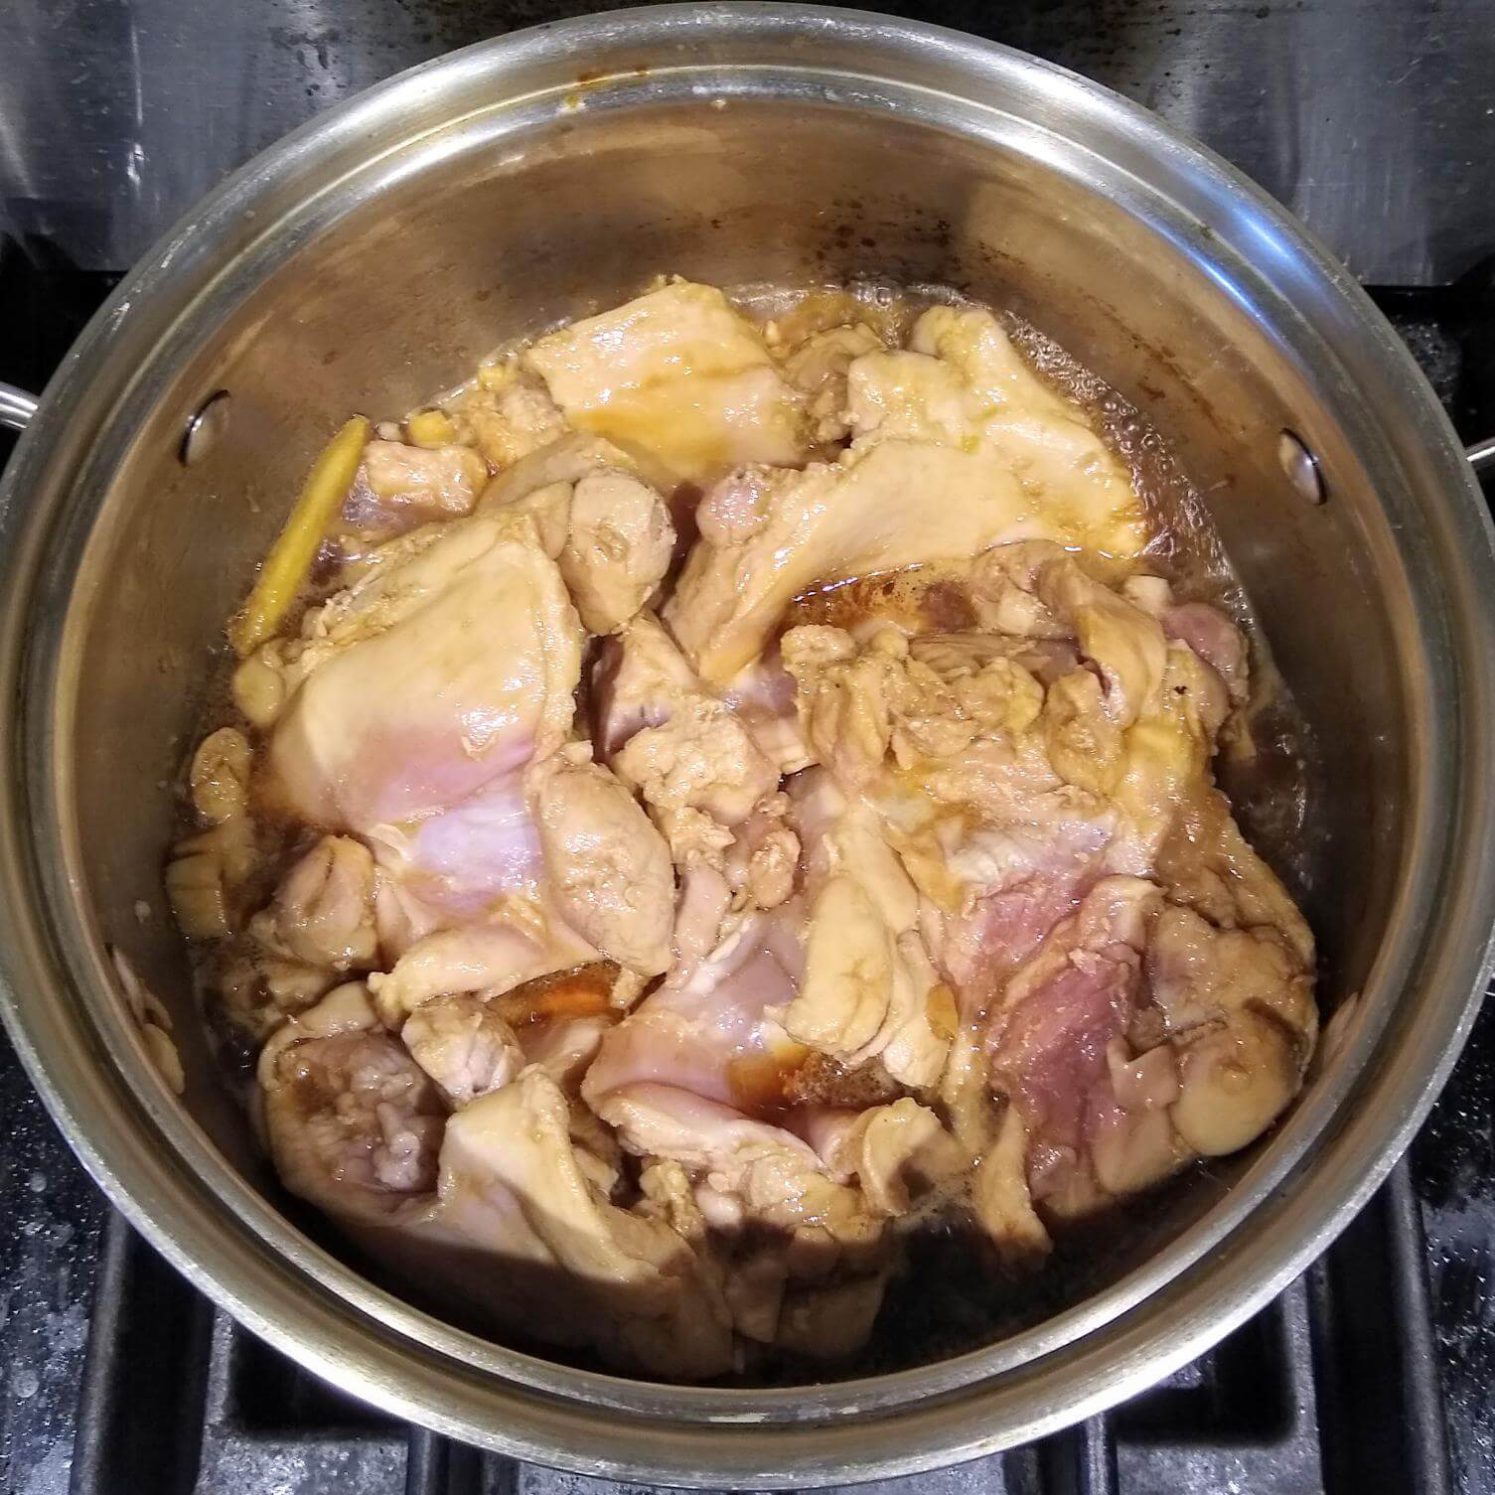 Added the Chicken